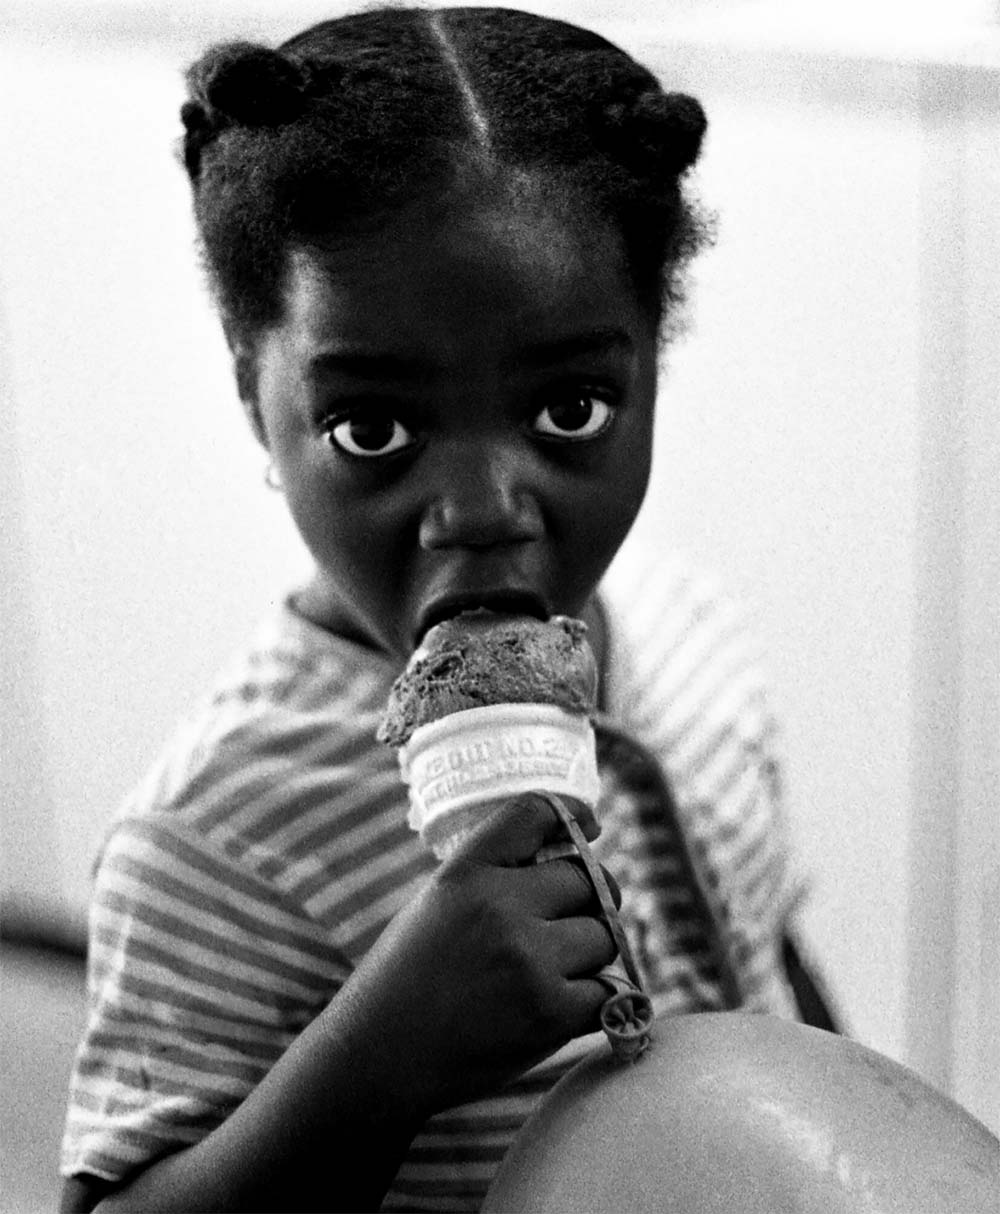 Girl Eating Ice Cream, Chicago, IL, 1967<p>© John Simmons</p>